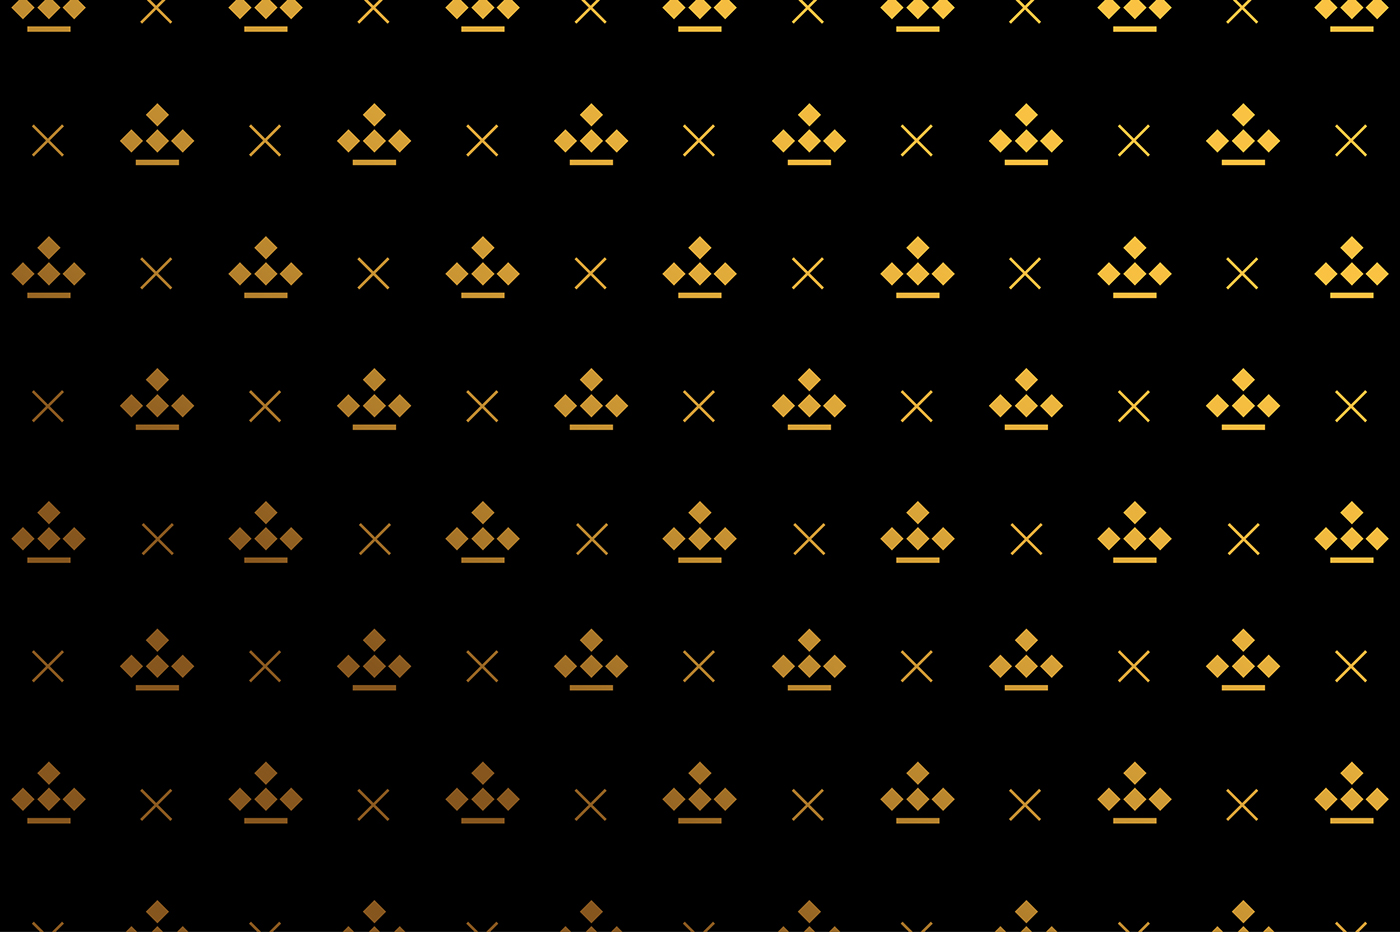 Patterns mosaic geometry handcraft copper foil gold identity Brand System ILLUSTRATION 